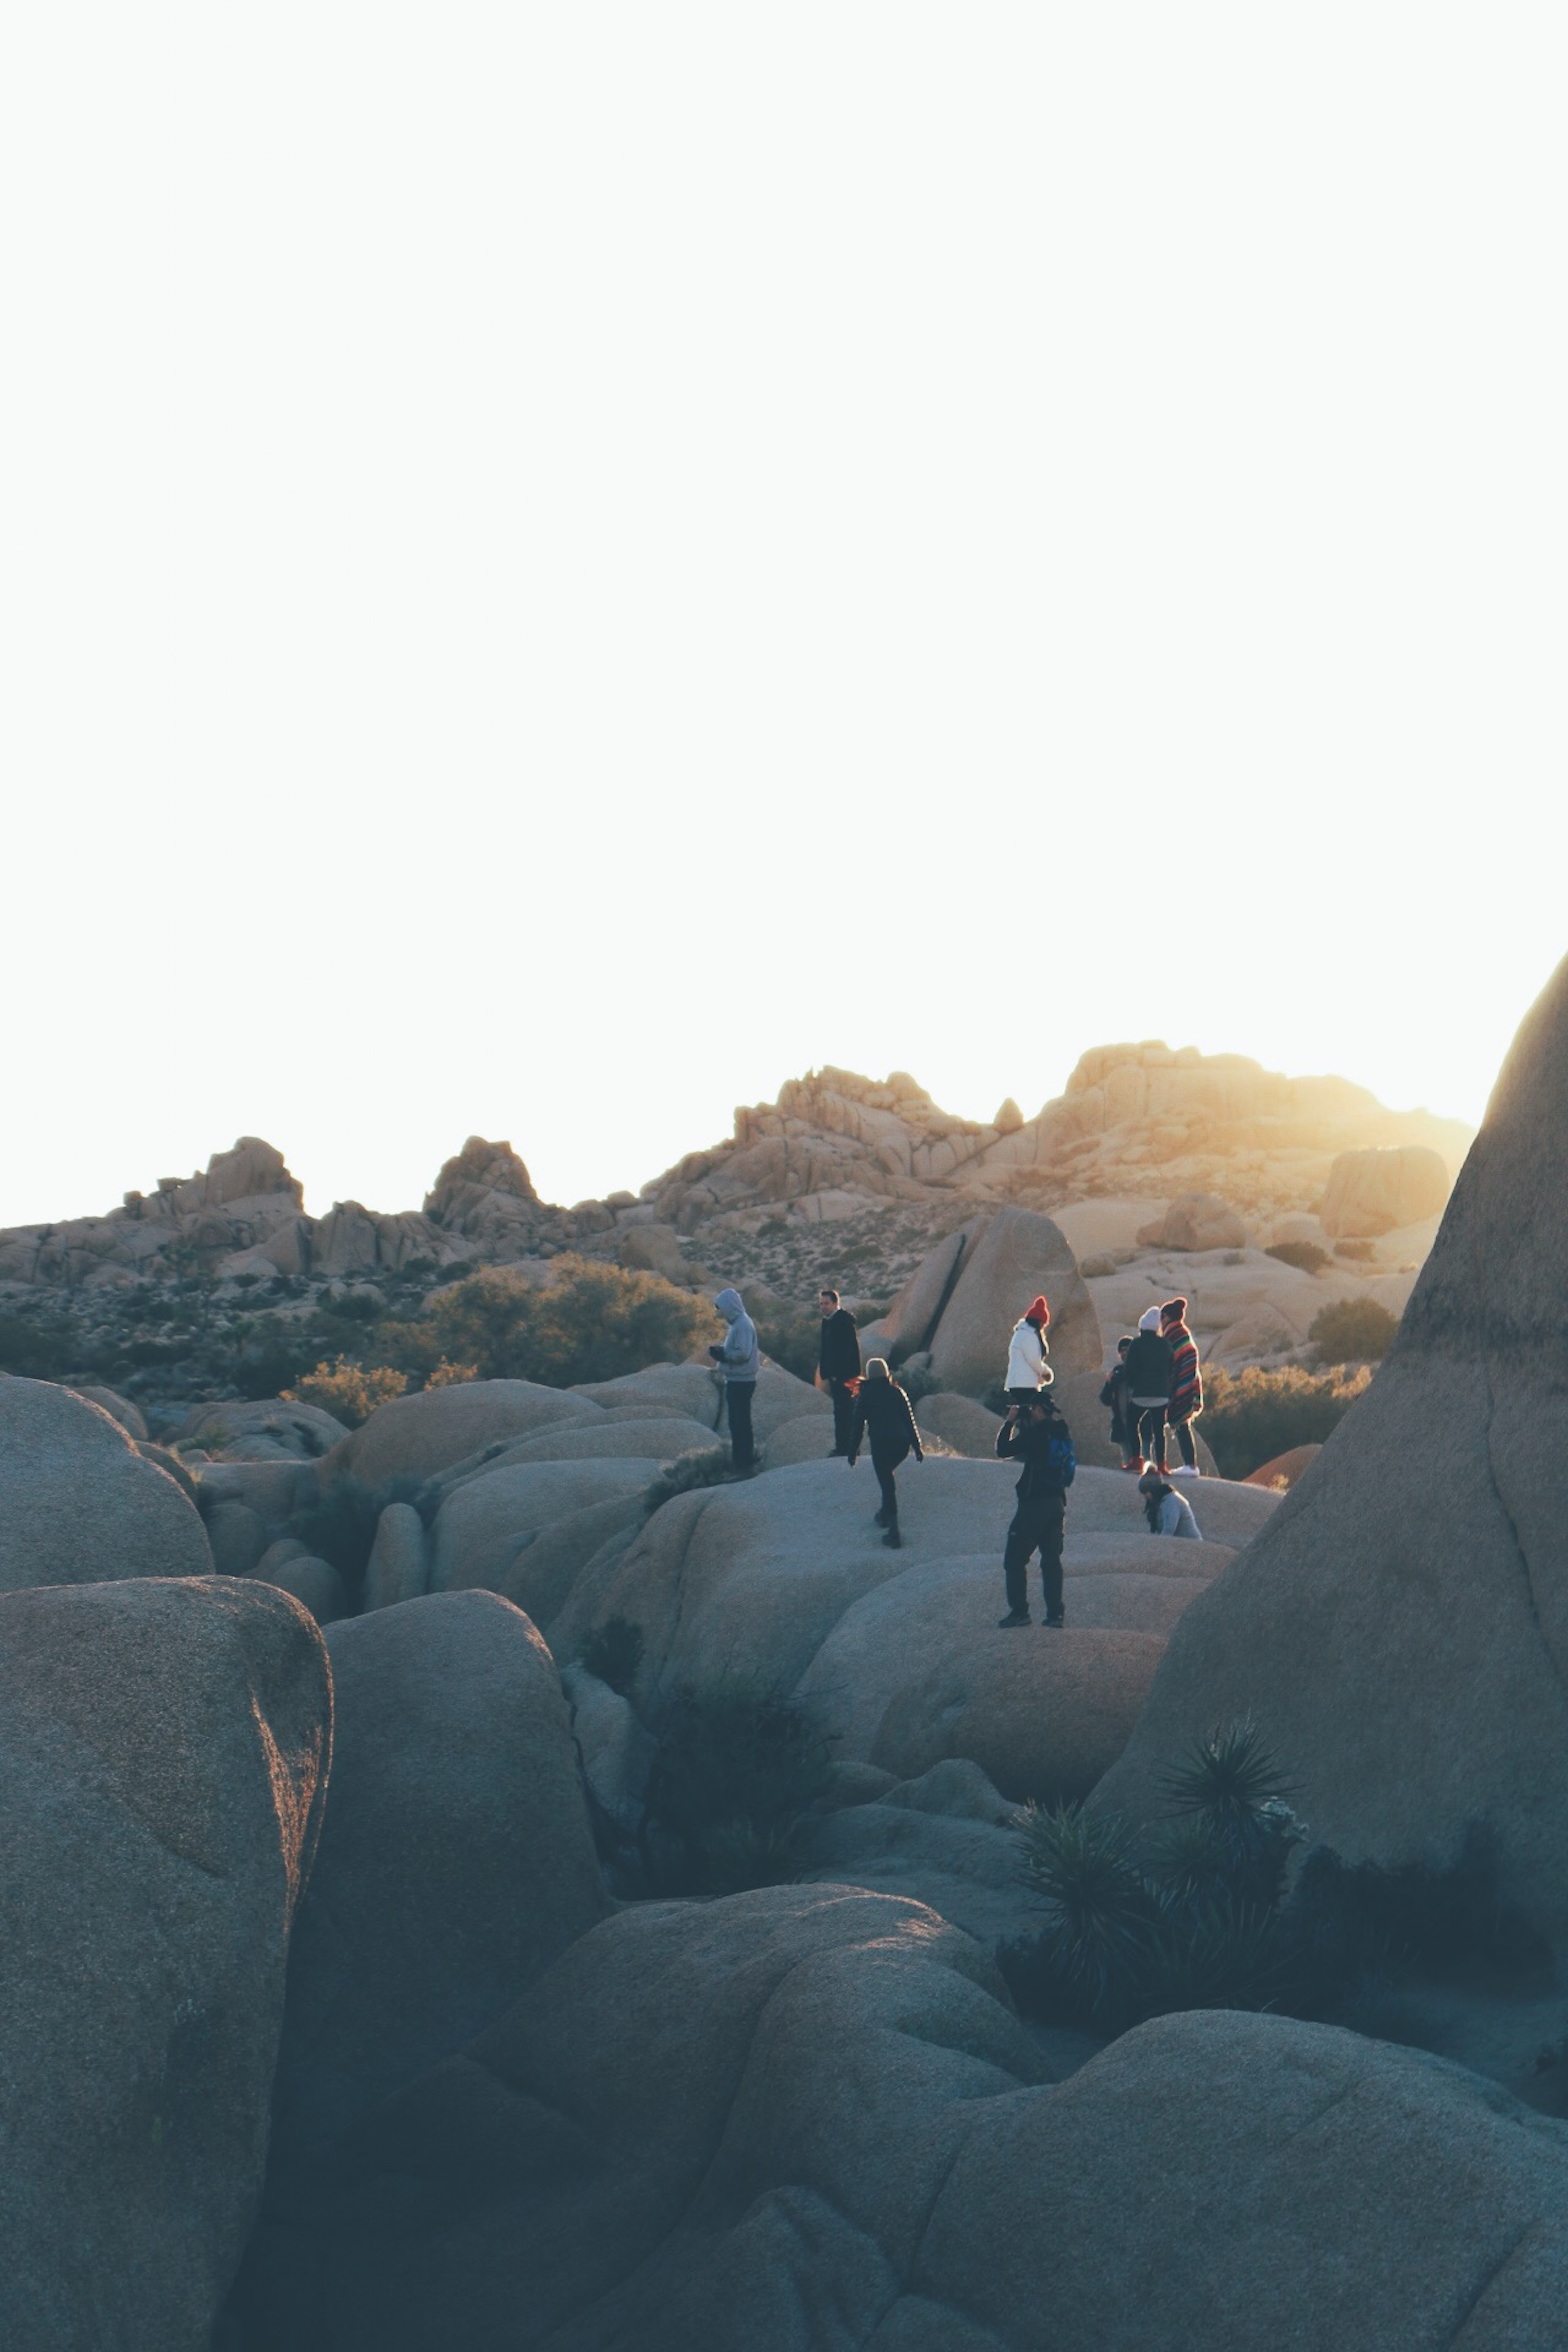 Group of people on rocks